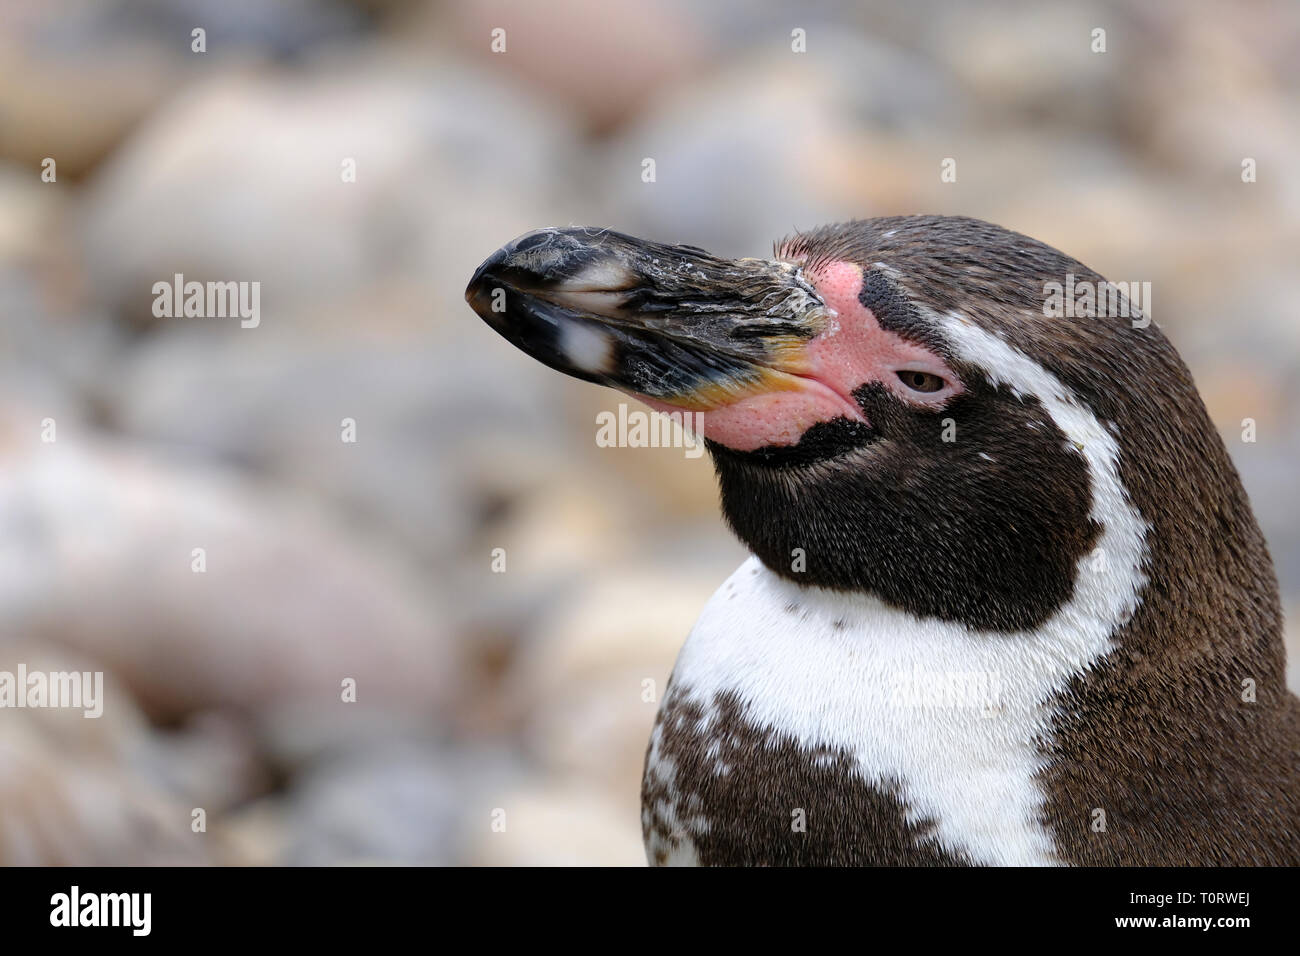 Humboldt Penguin head in profile - captive bird Stock Photo